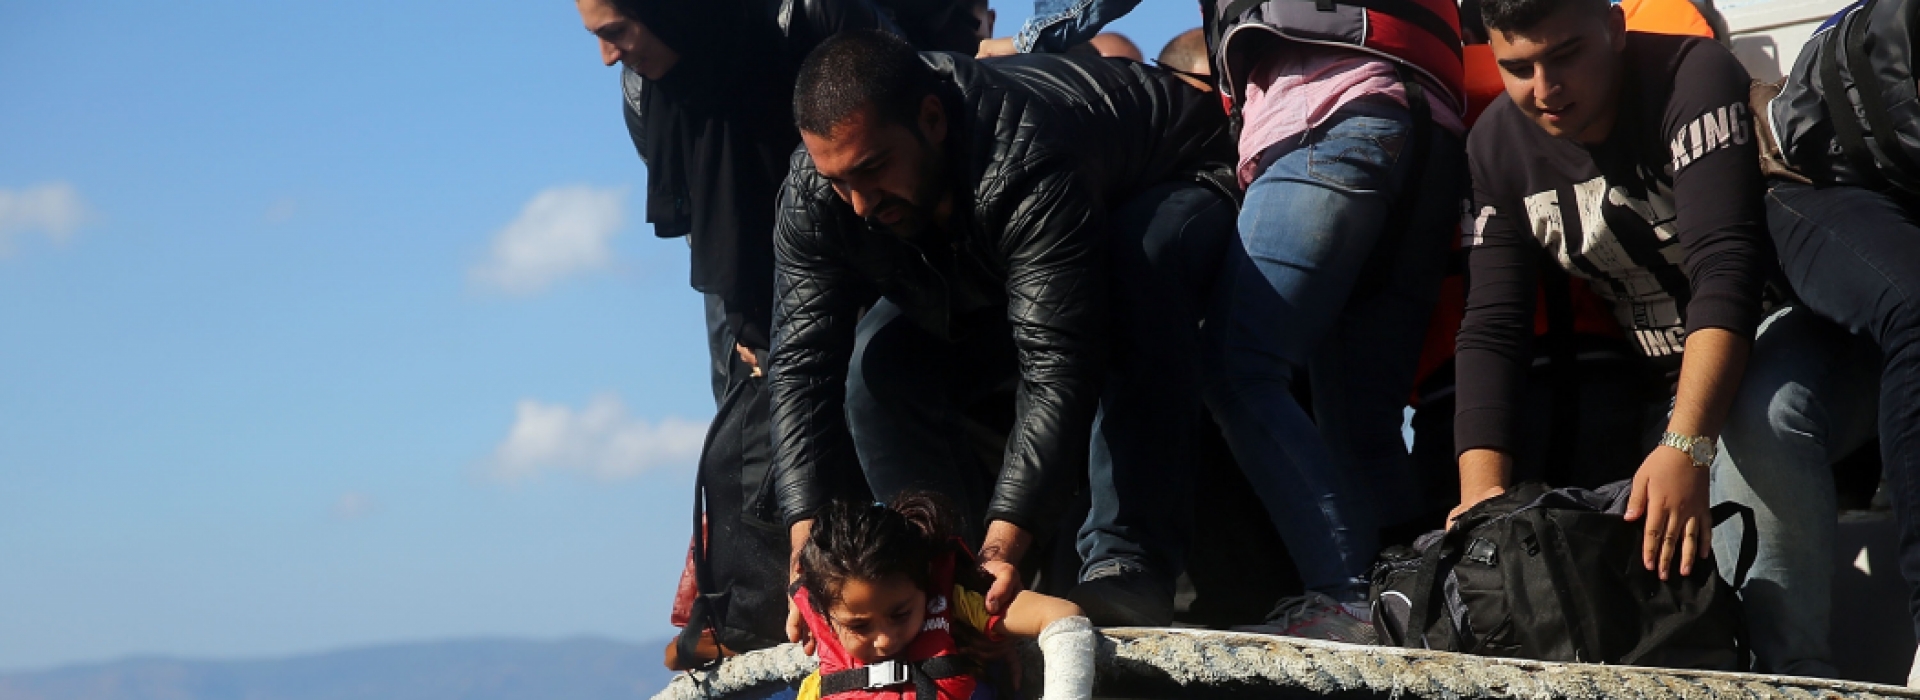 Refugiați sirieni ajung în Insula Lesbos, Grecia